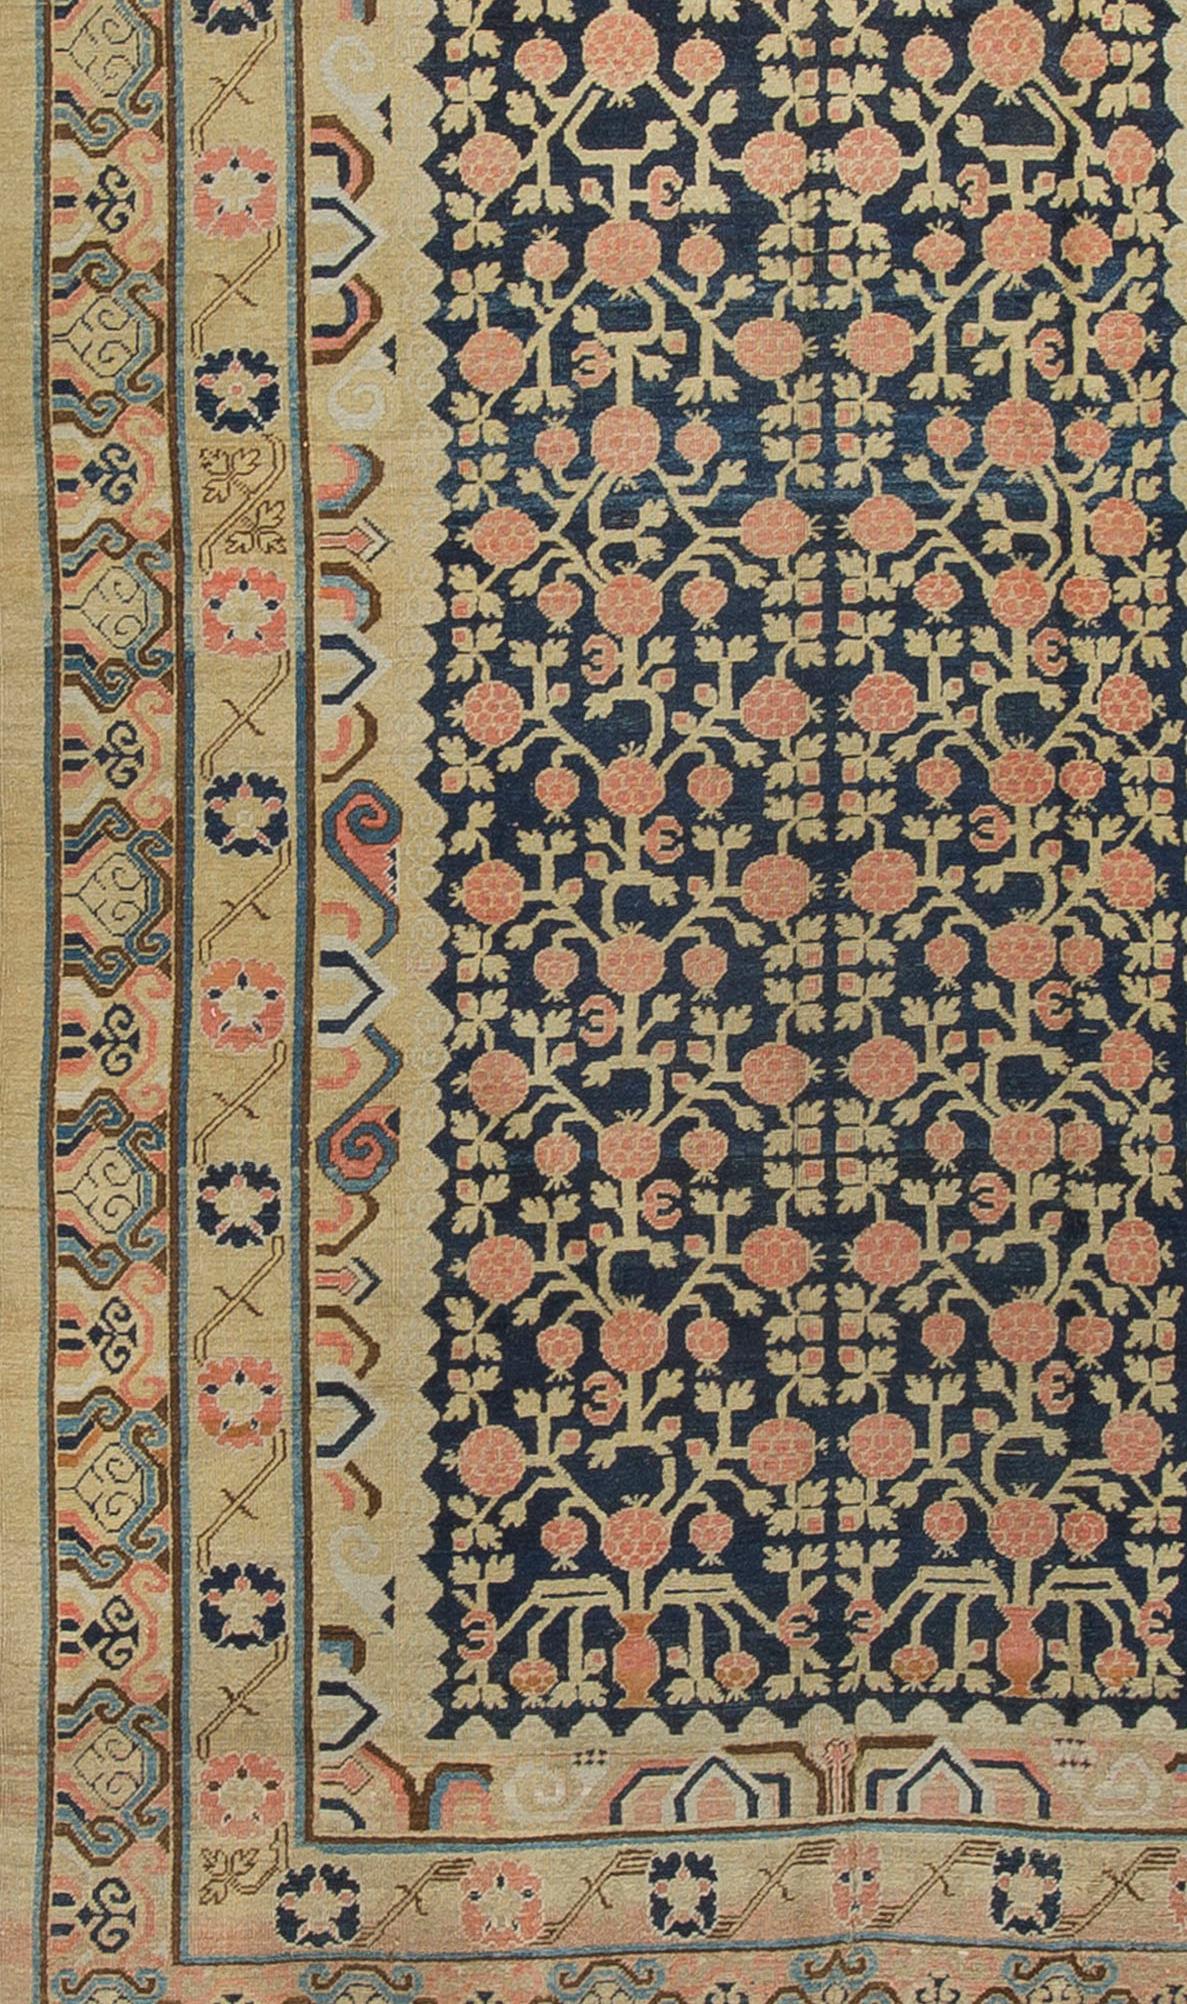 Hand-Woven Antique Khotan Samarkand Rug For Sale